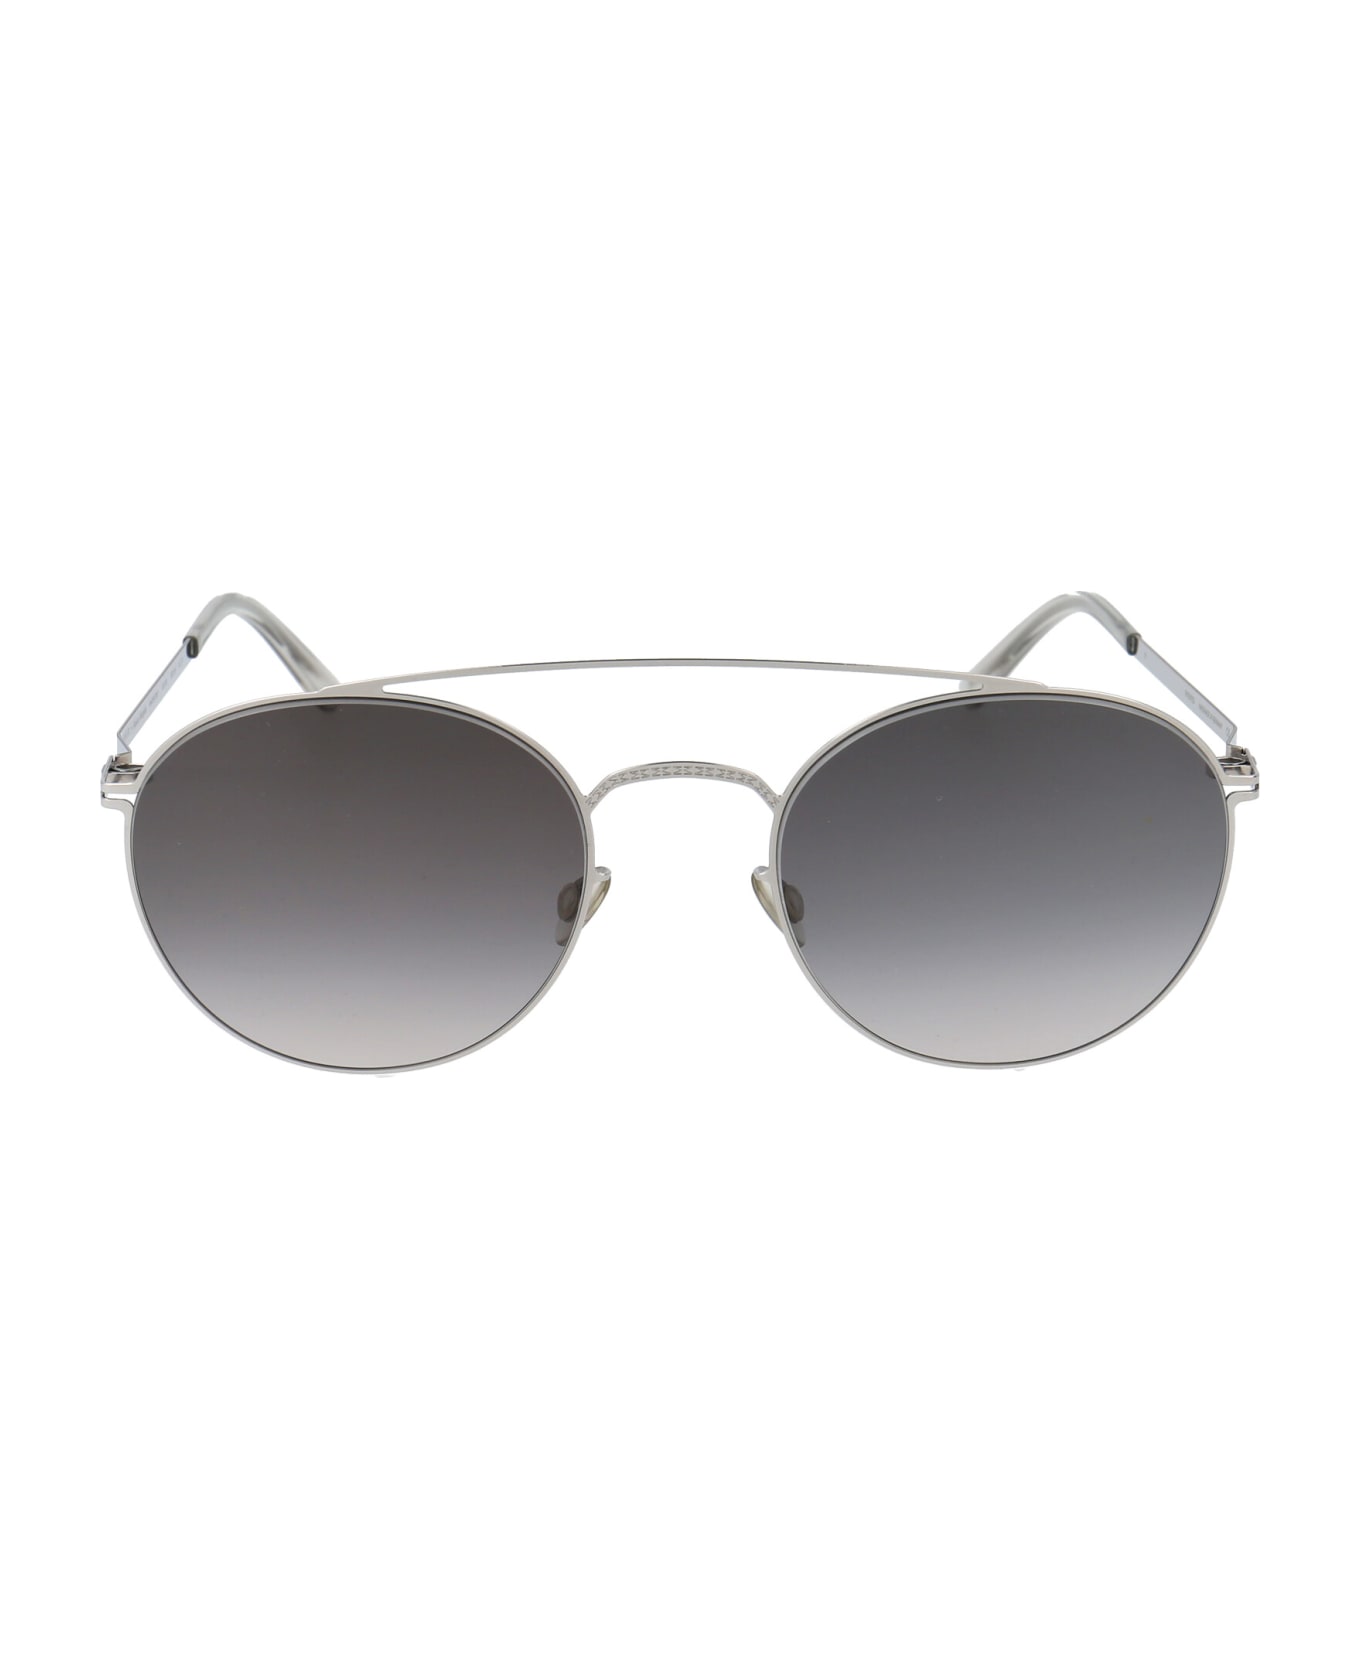 Mykita Mmcraft007 Sunglasses - 051 SHINYSILVER | GREY GRADIENT サングラス